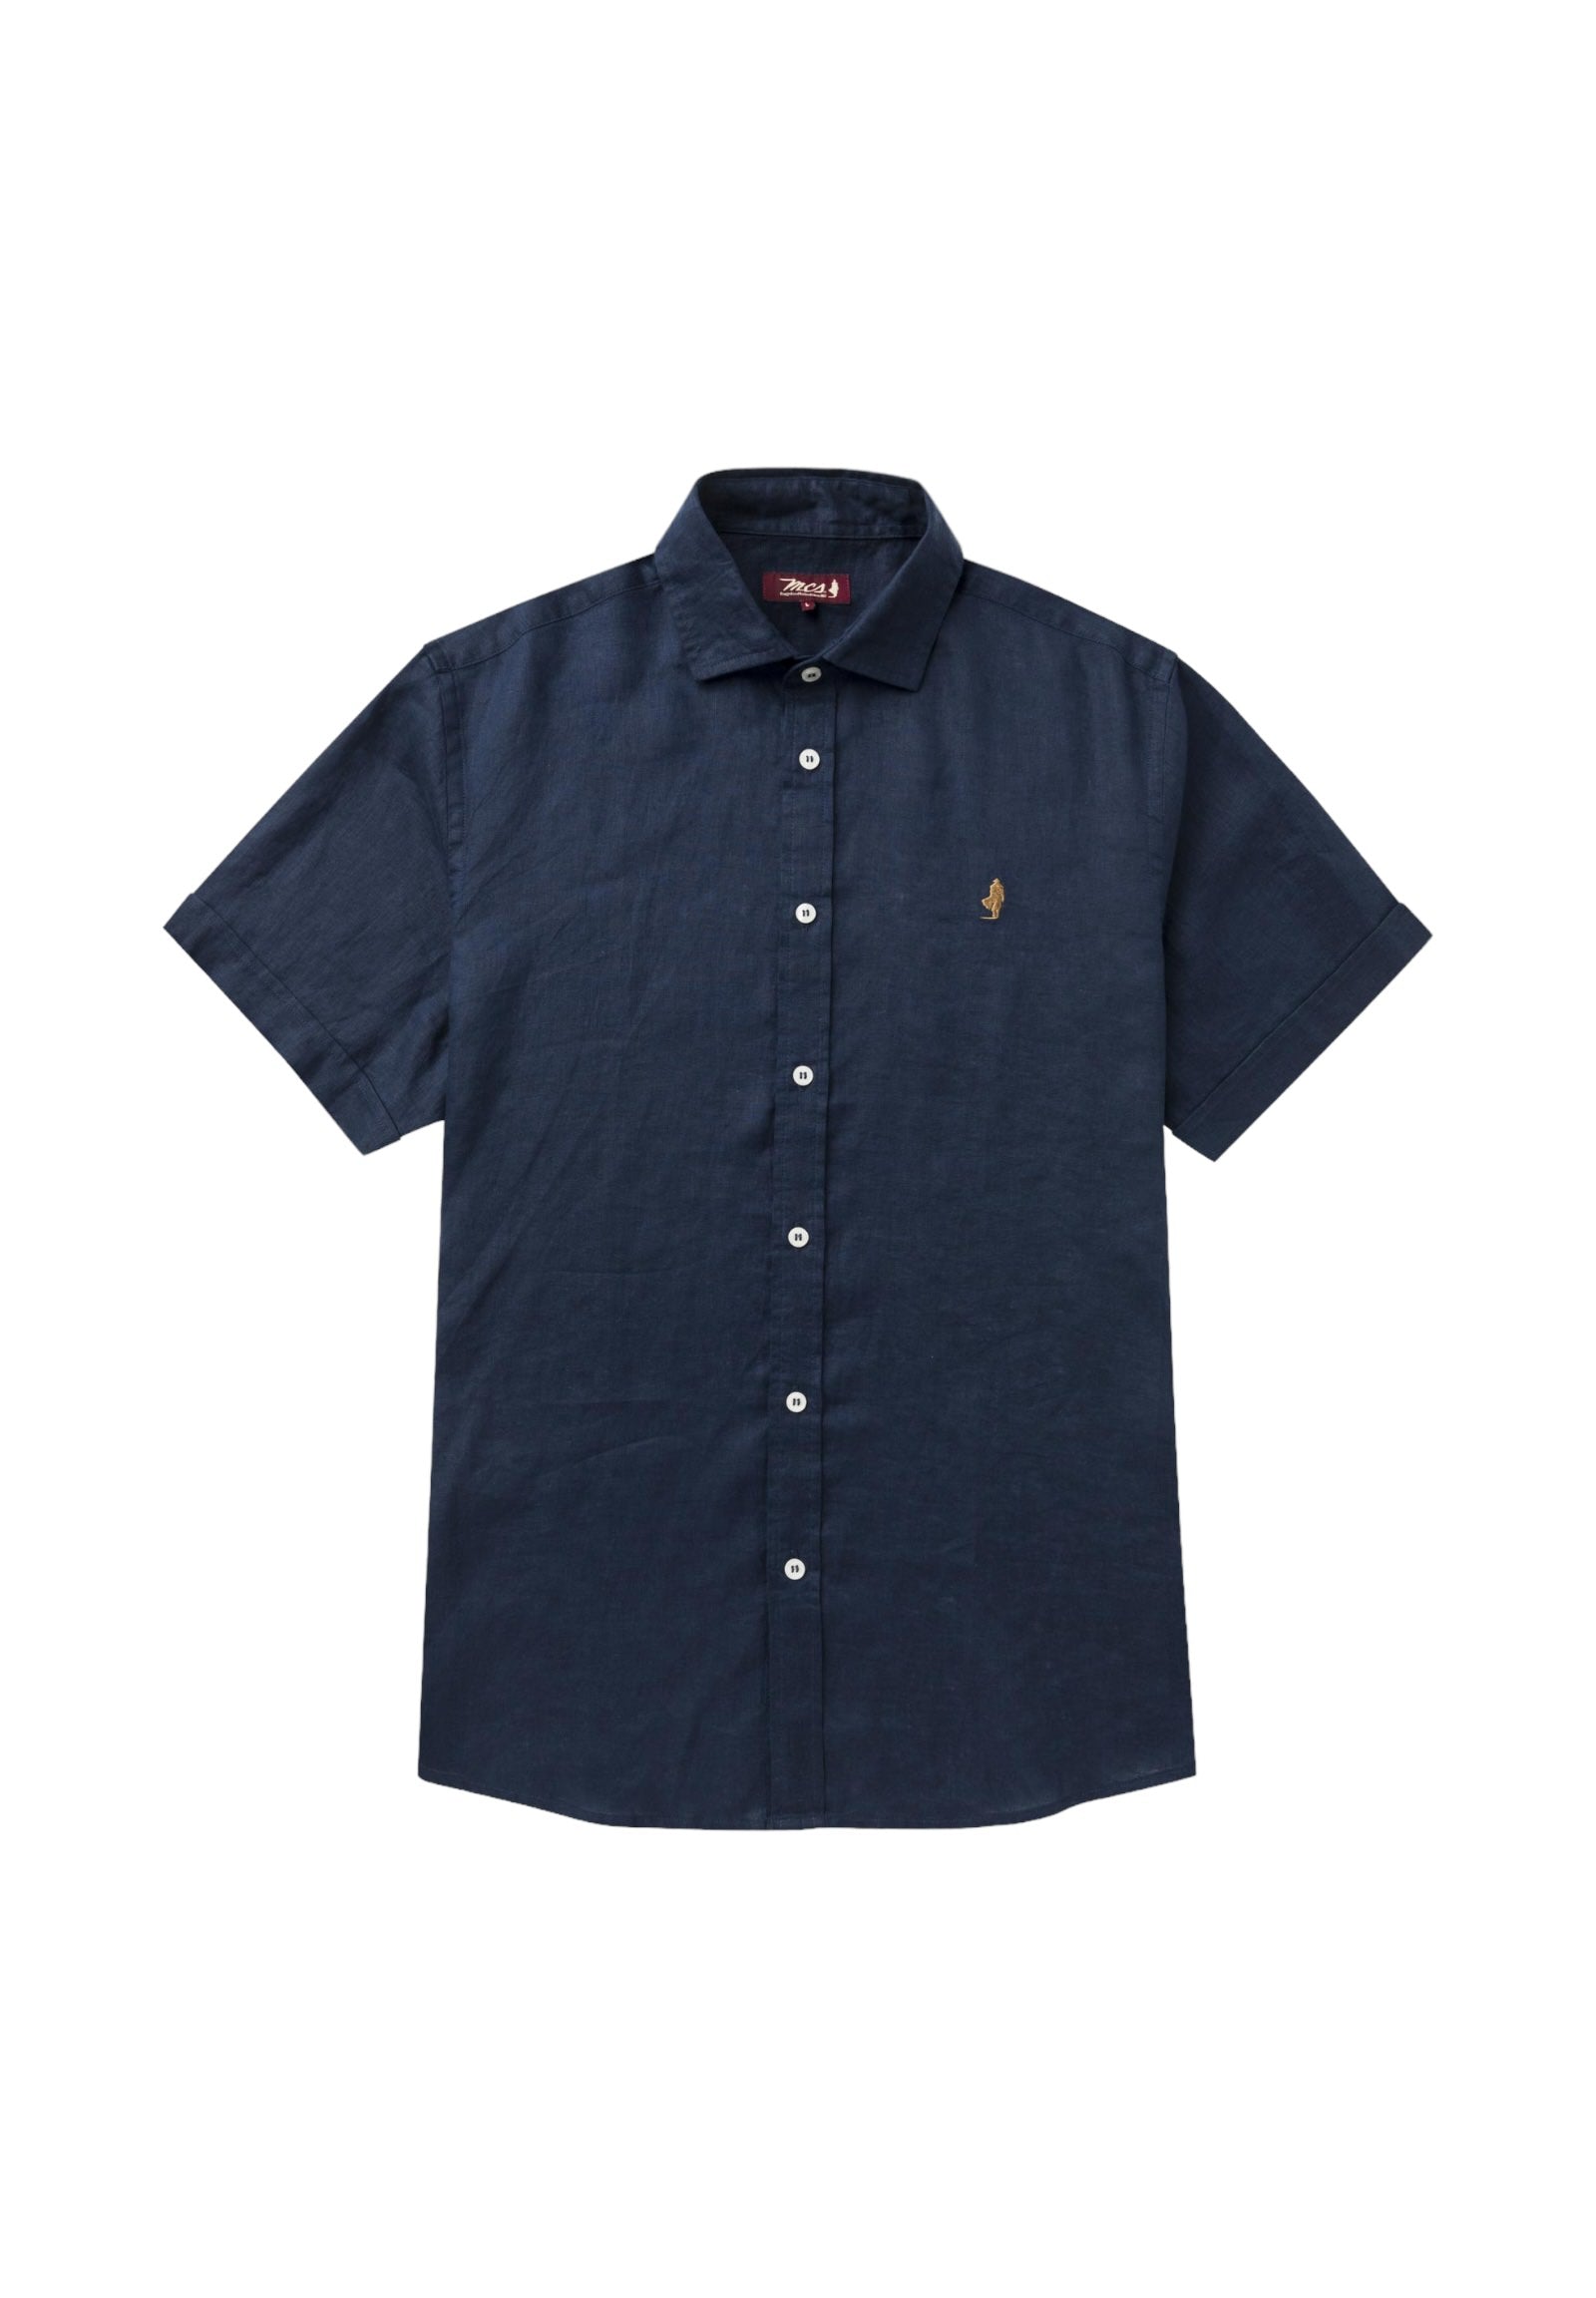 Short Sleeve Shirt 10msh207-02608 Navy Blue